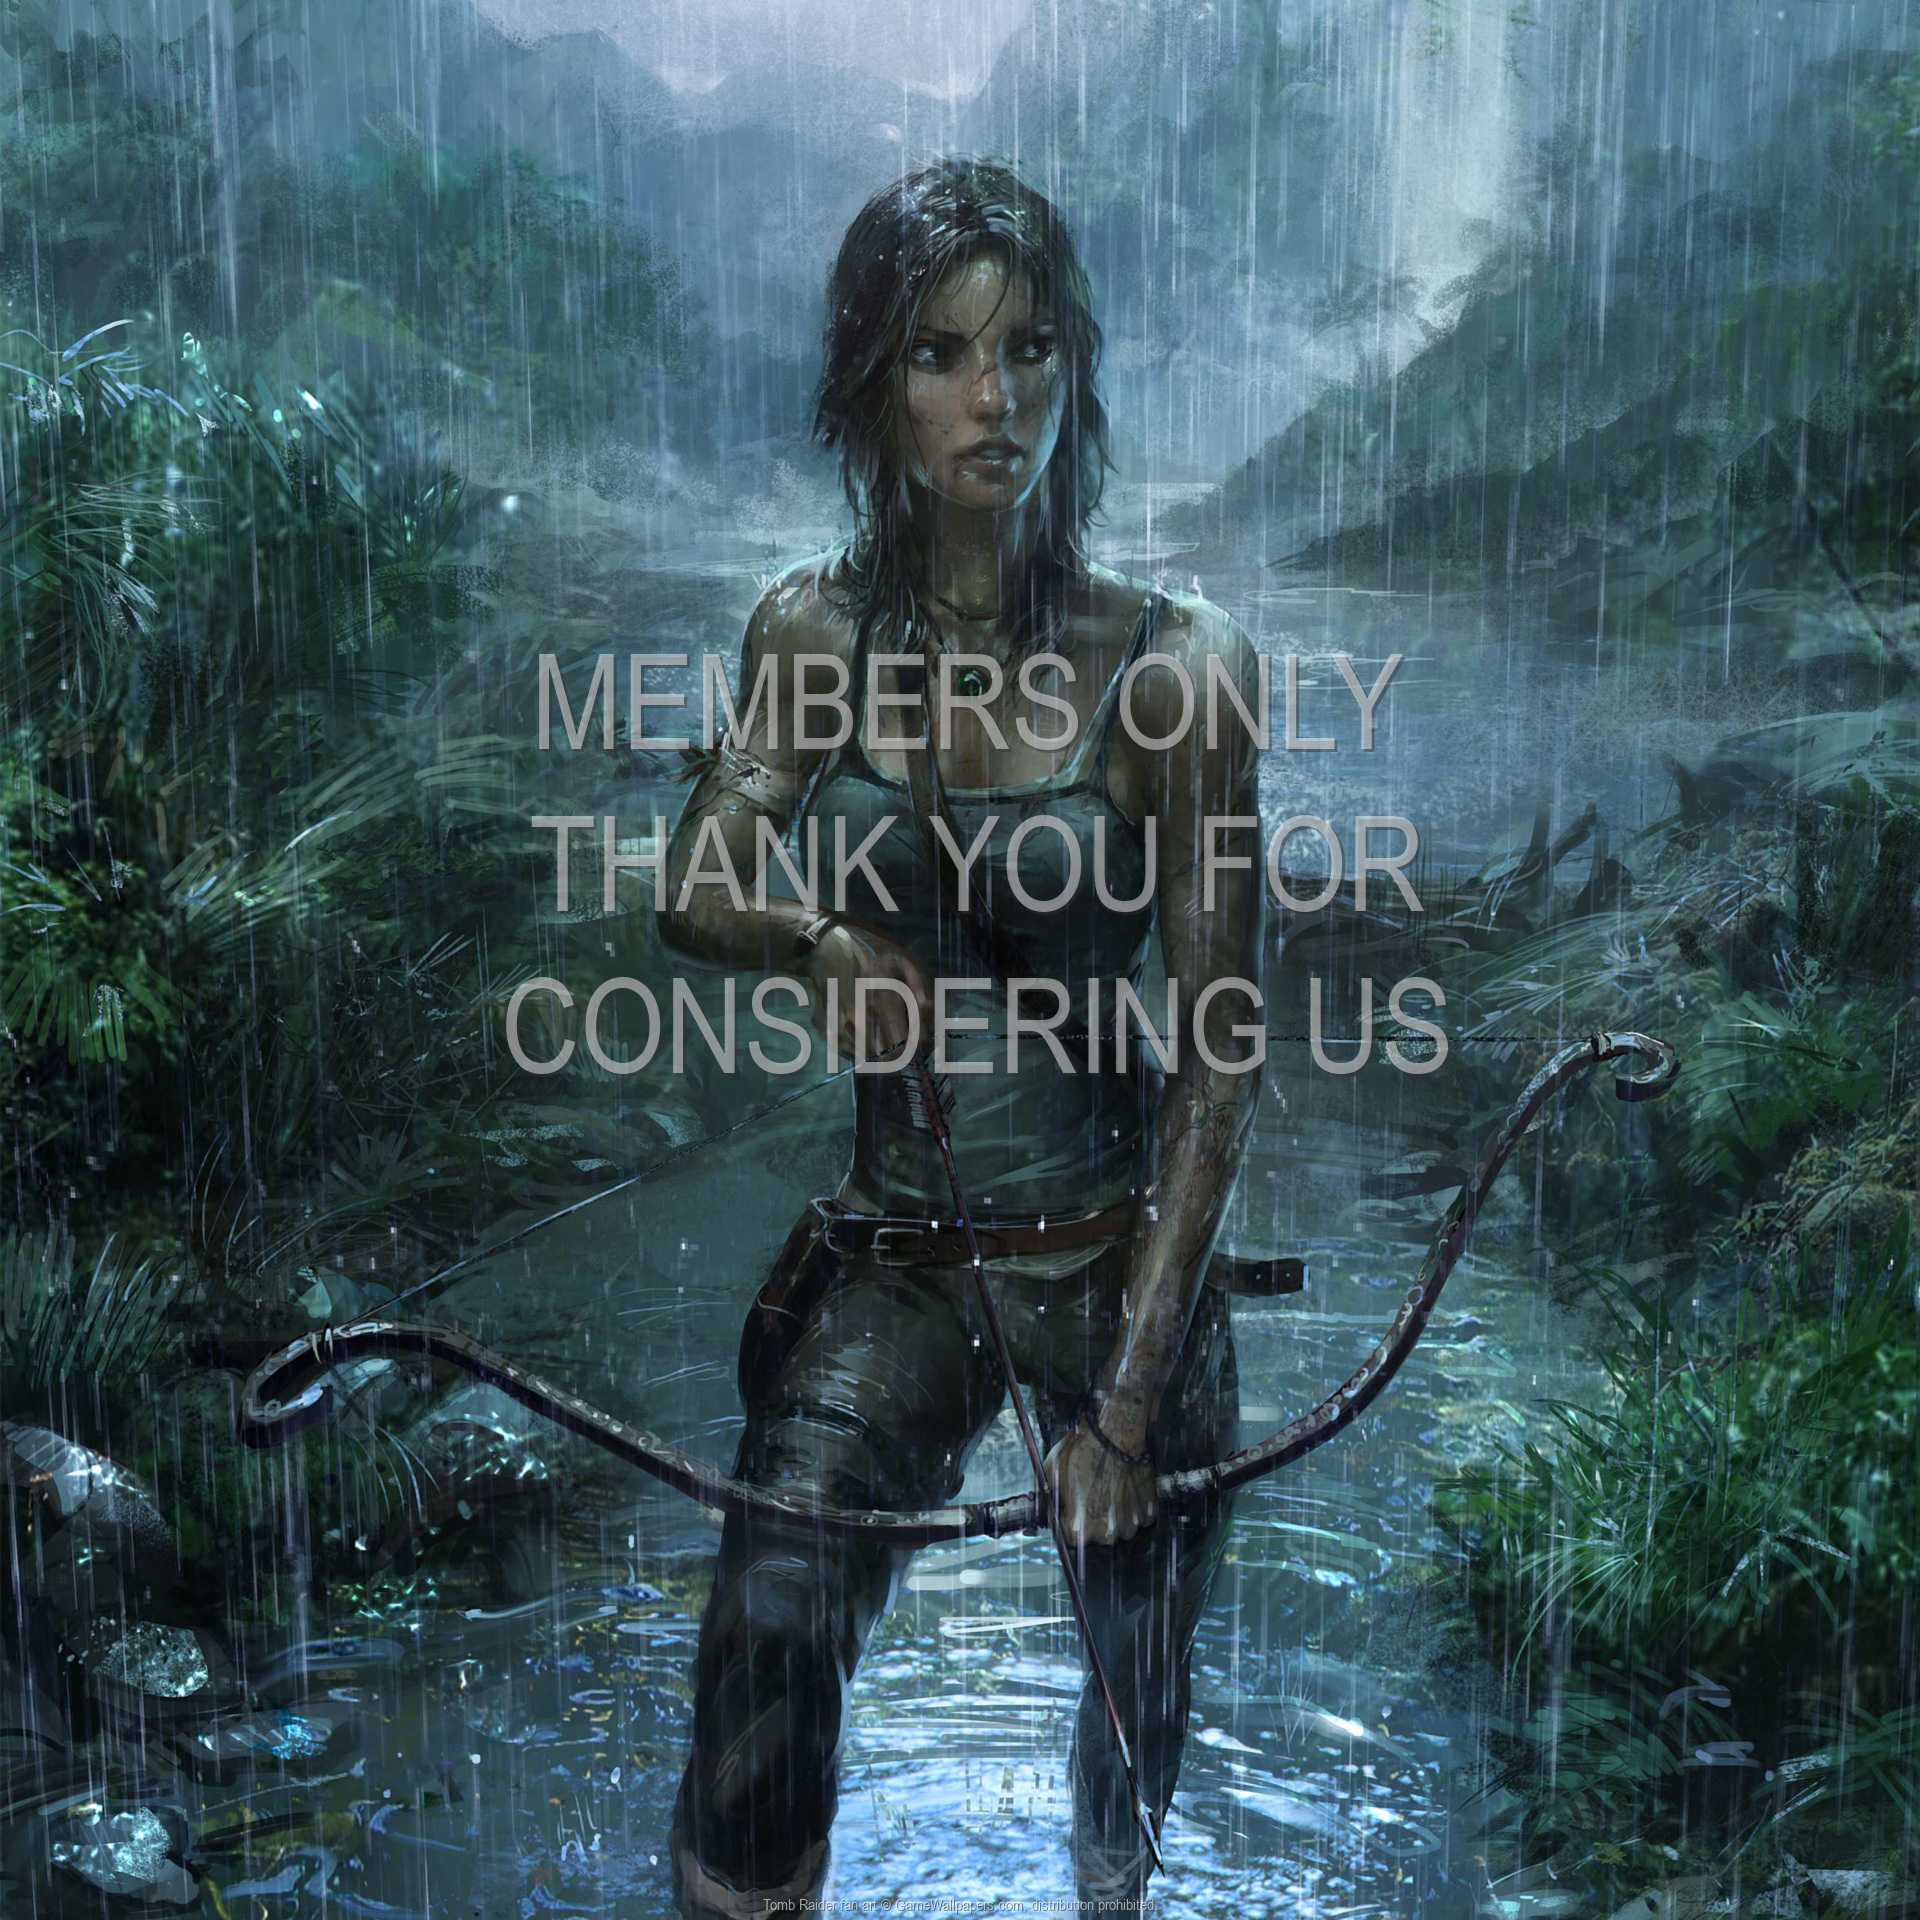 Tomb Raider fan art 1080p%20Horizontal Mobile wallpaper or background 01